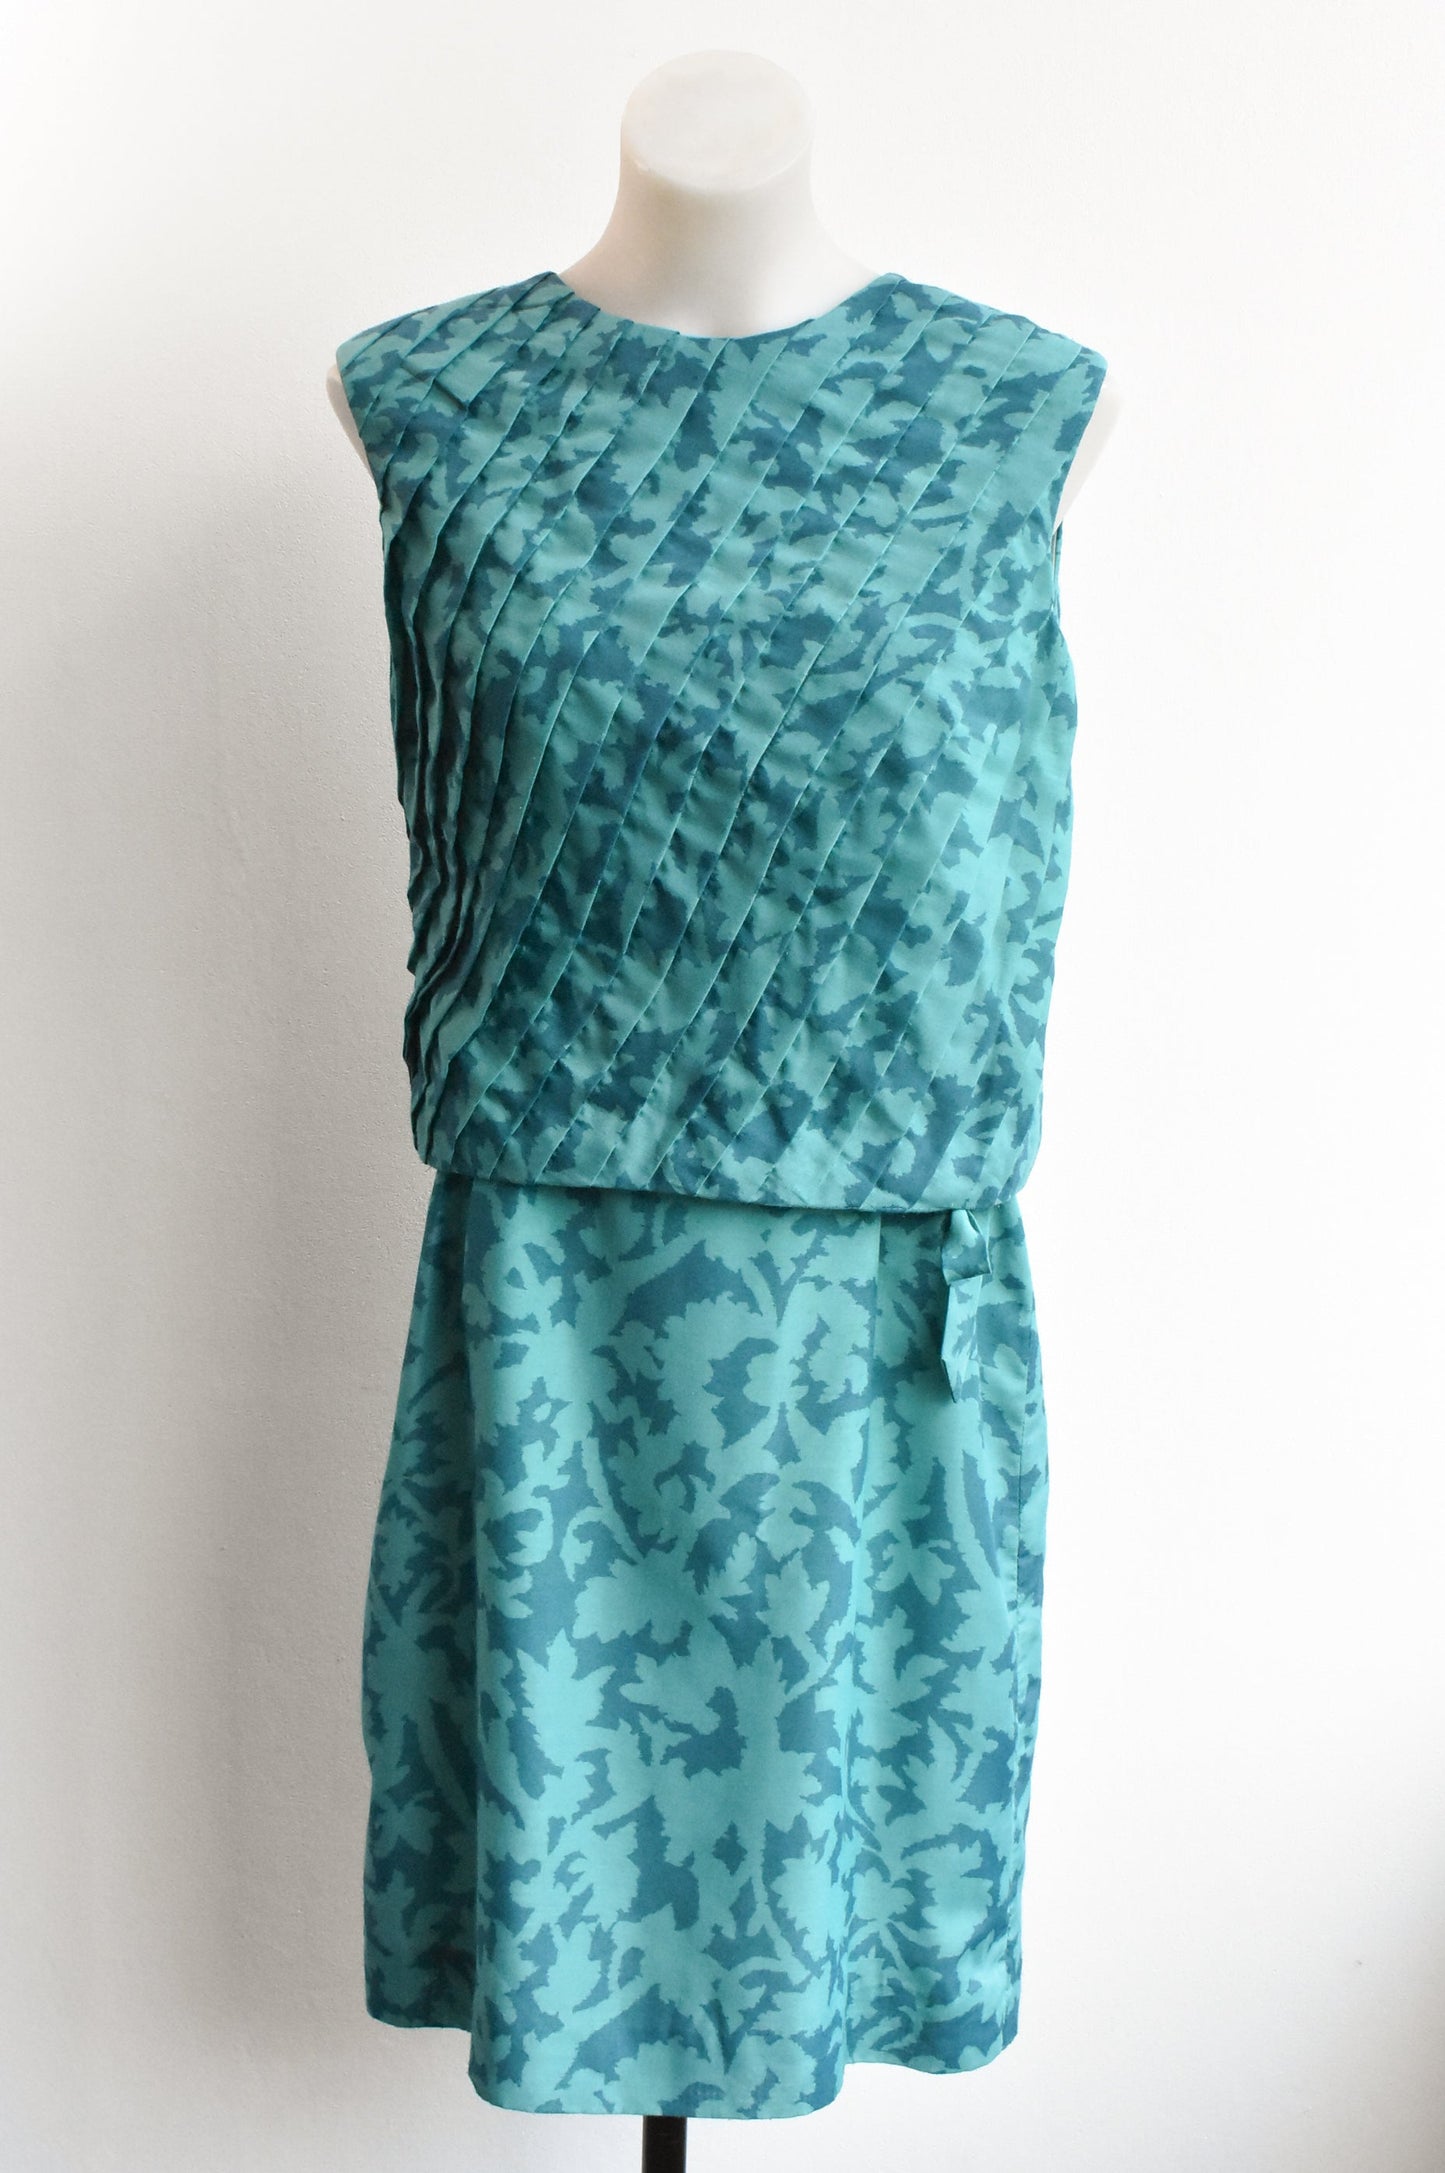 Peter Barron retro green sleeveless dress, size M